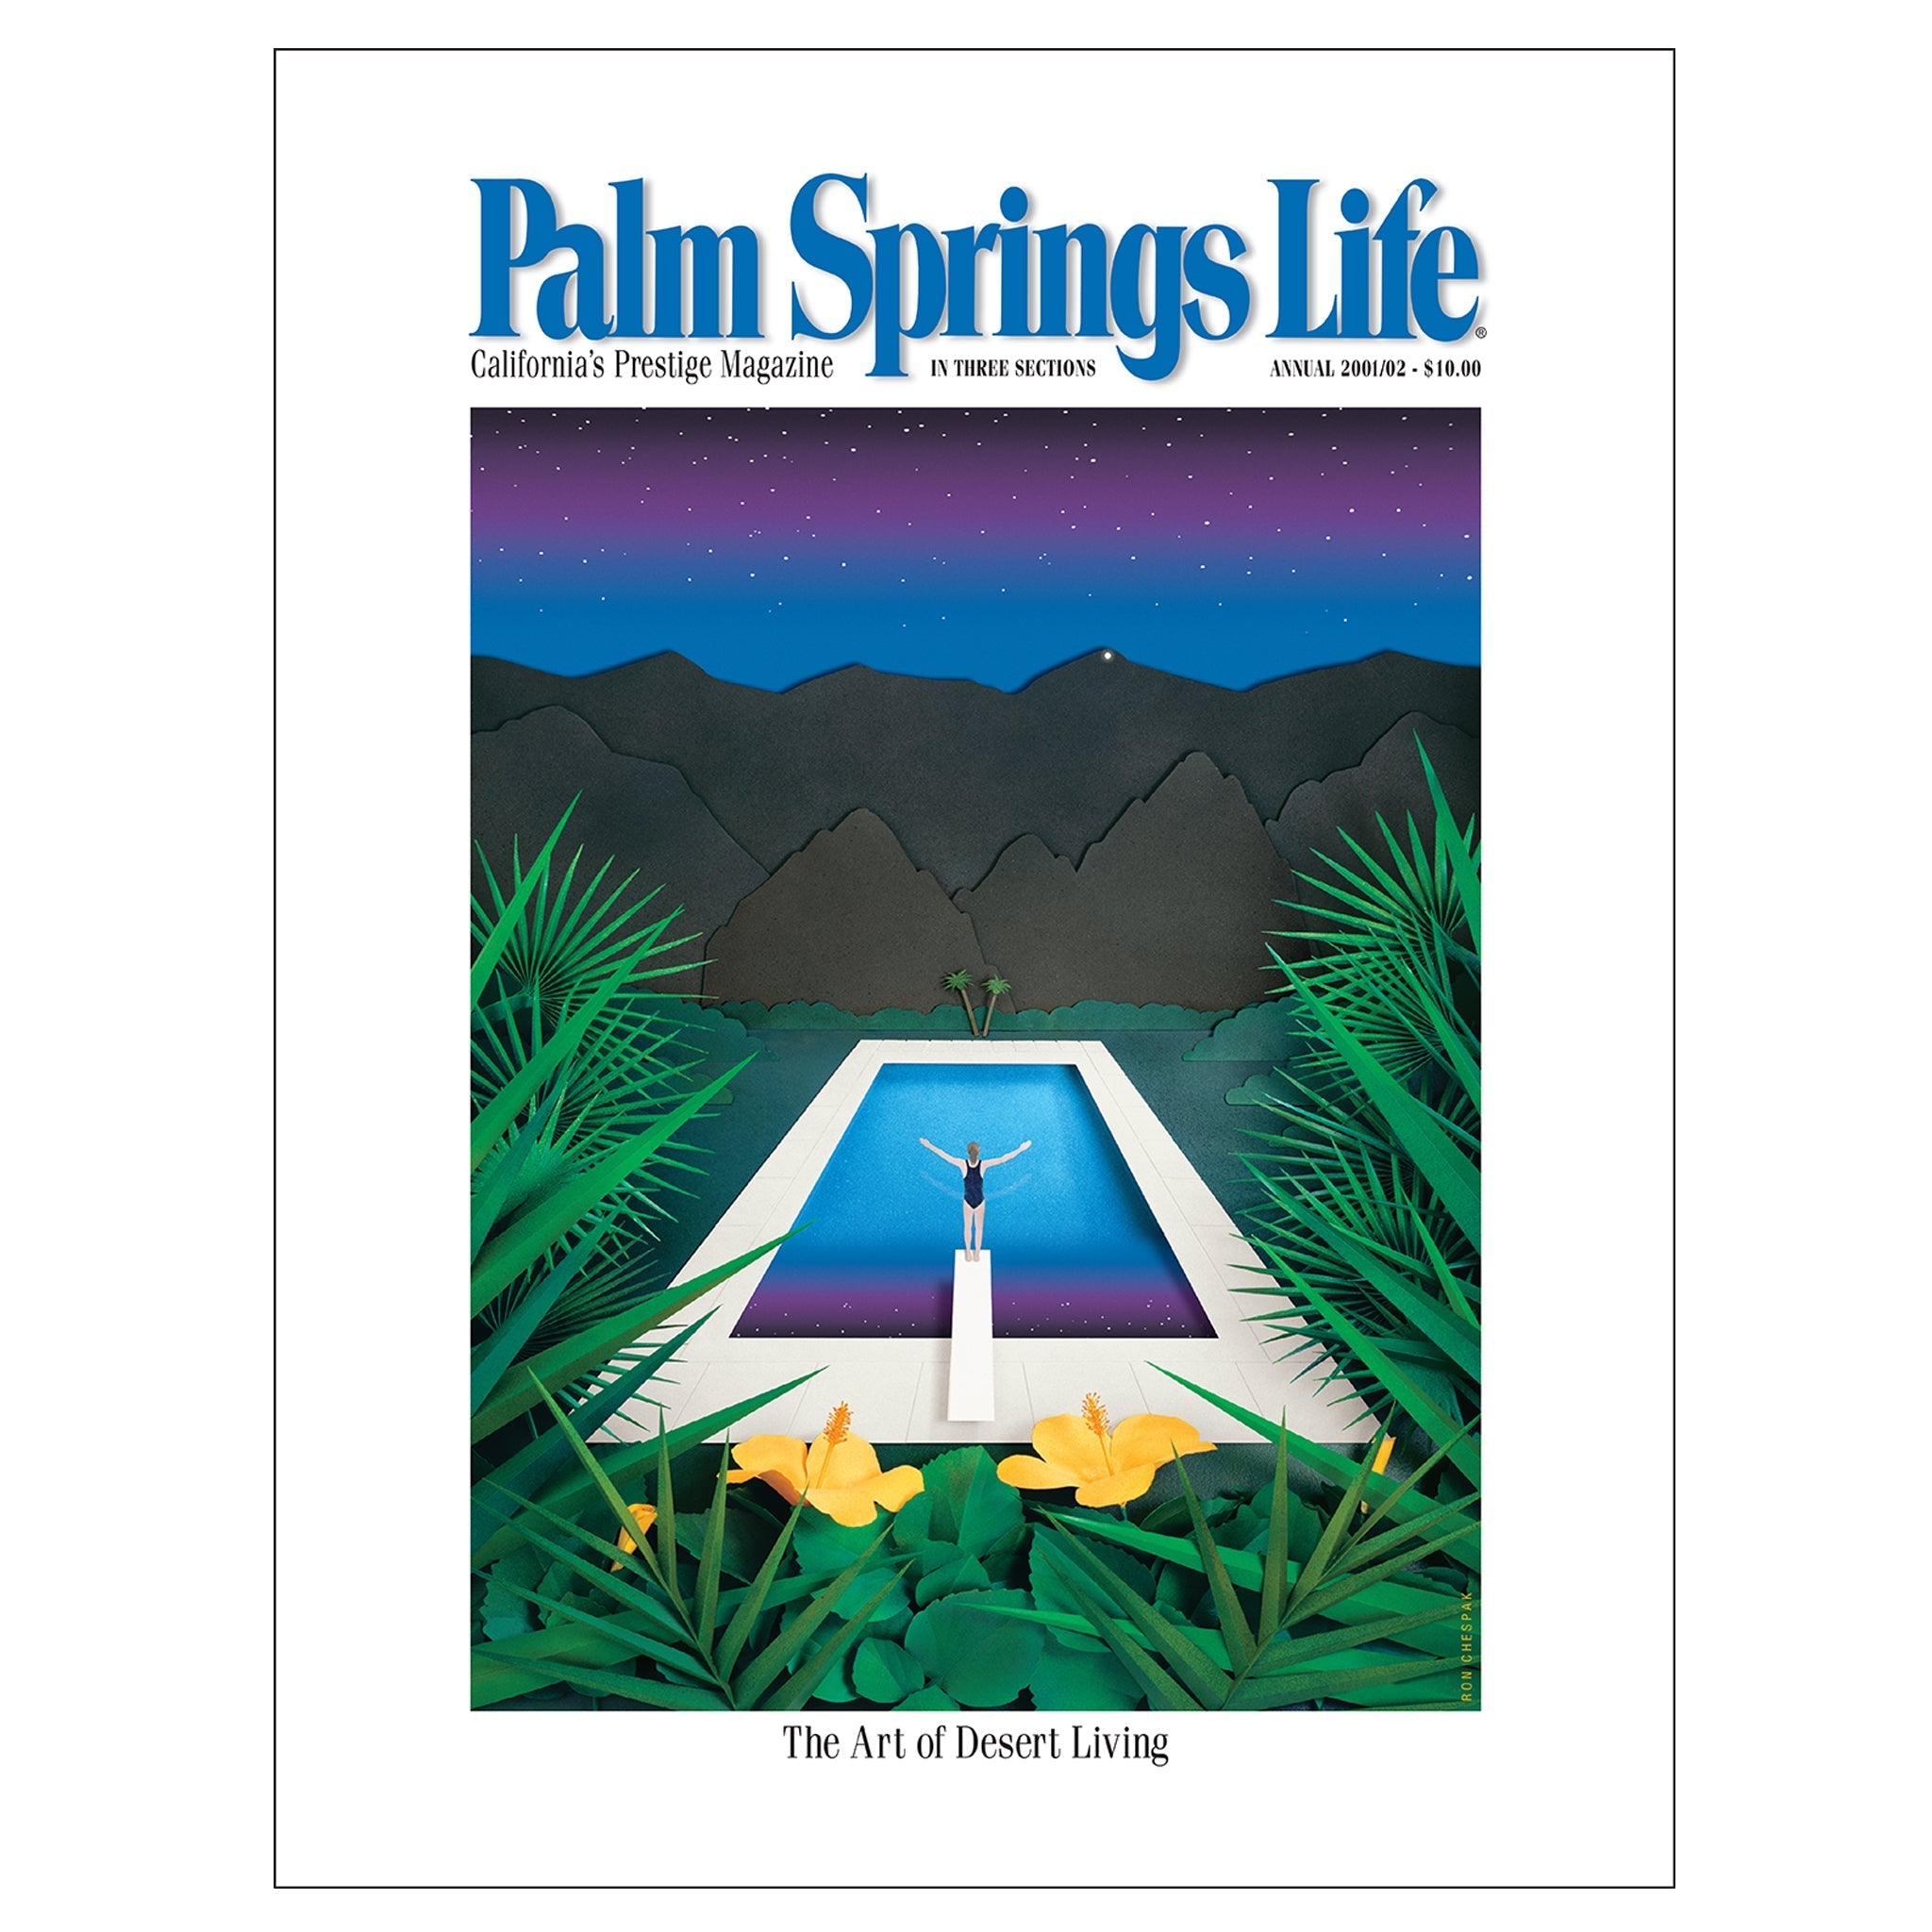 Palm Springs Life - September 2001 - Cover Poster